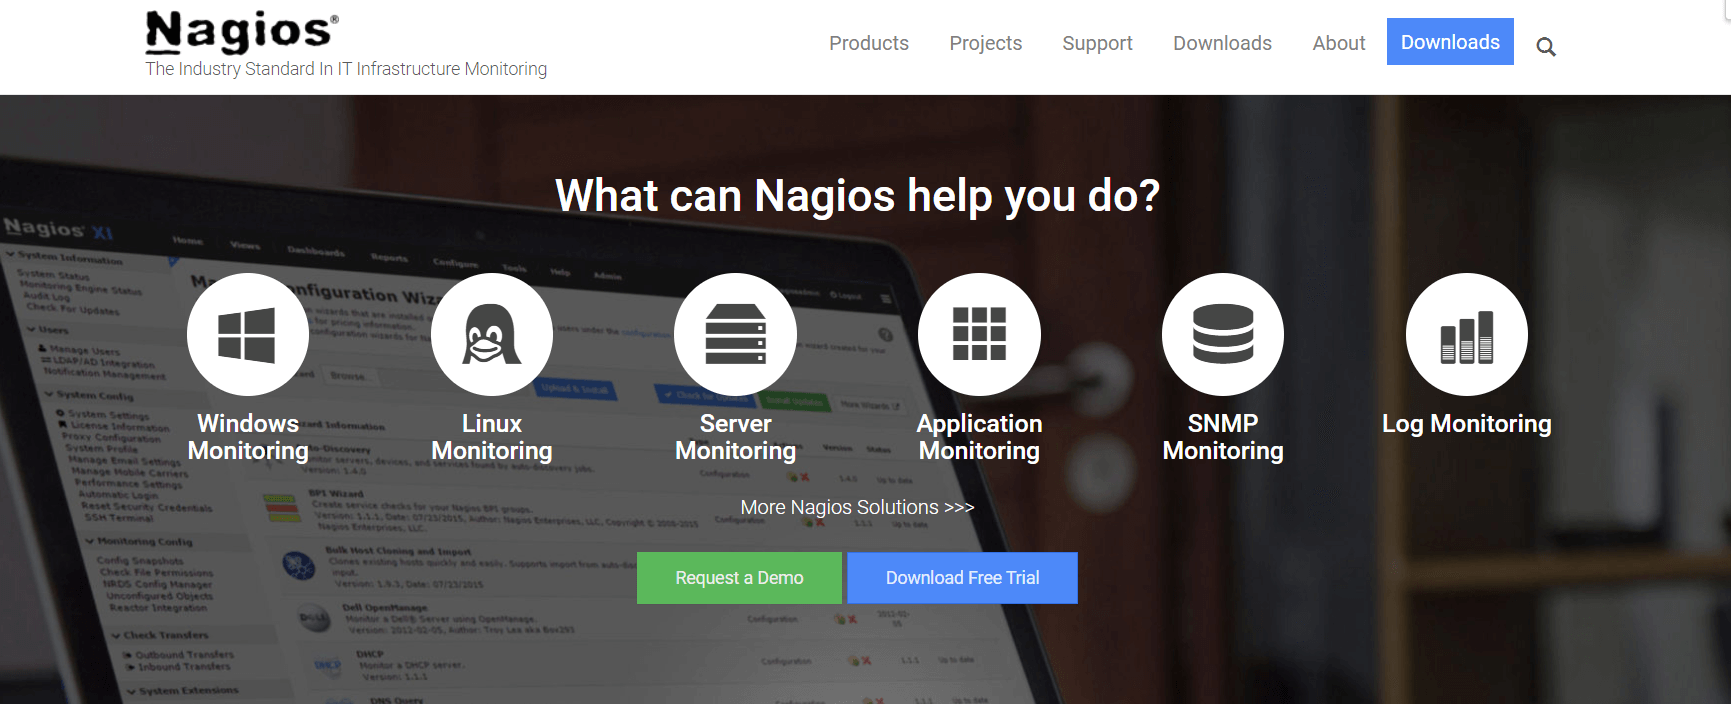 Nagios Homepage